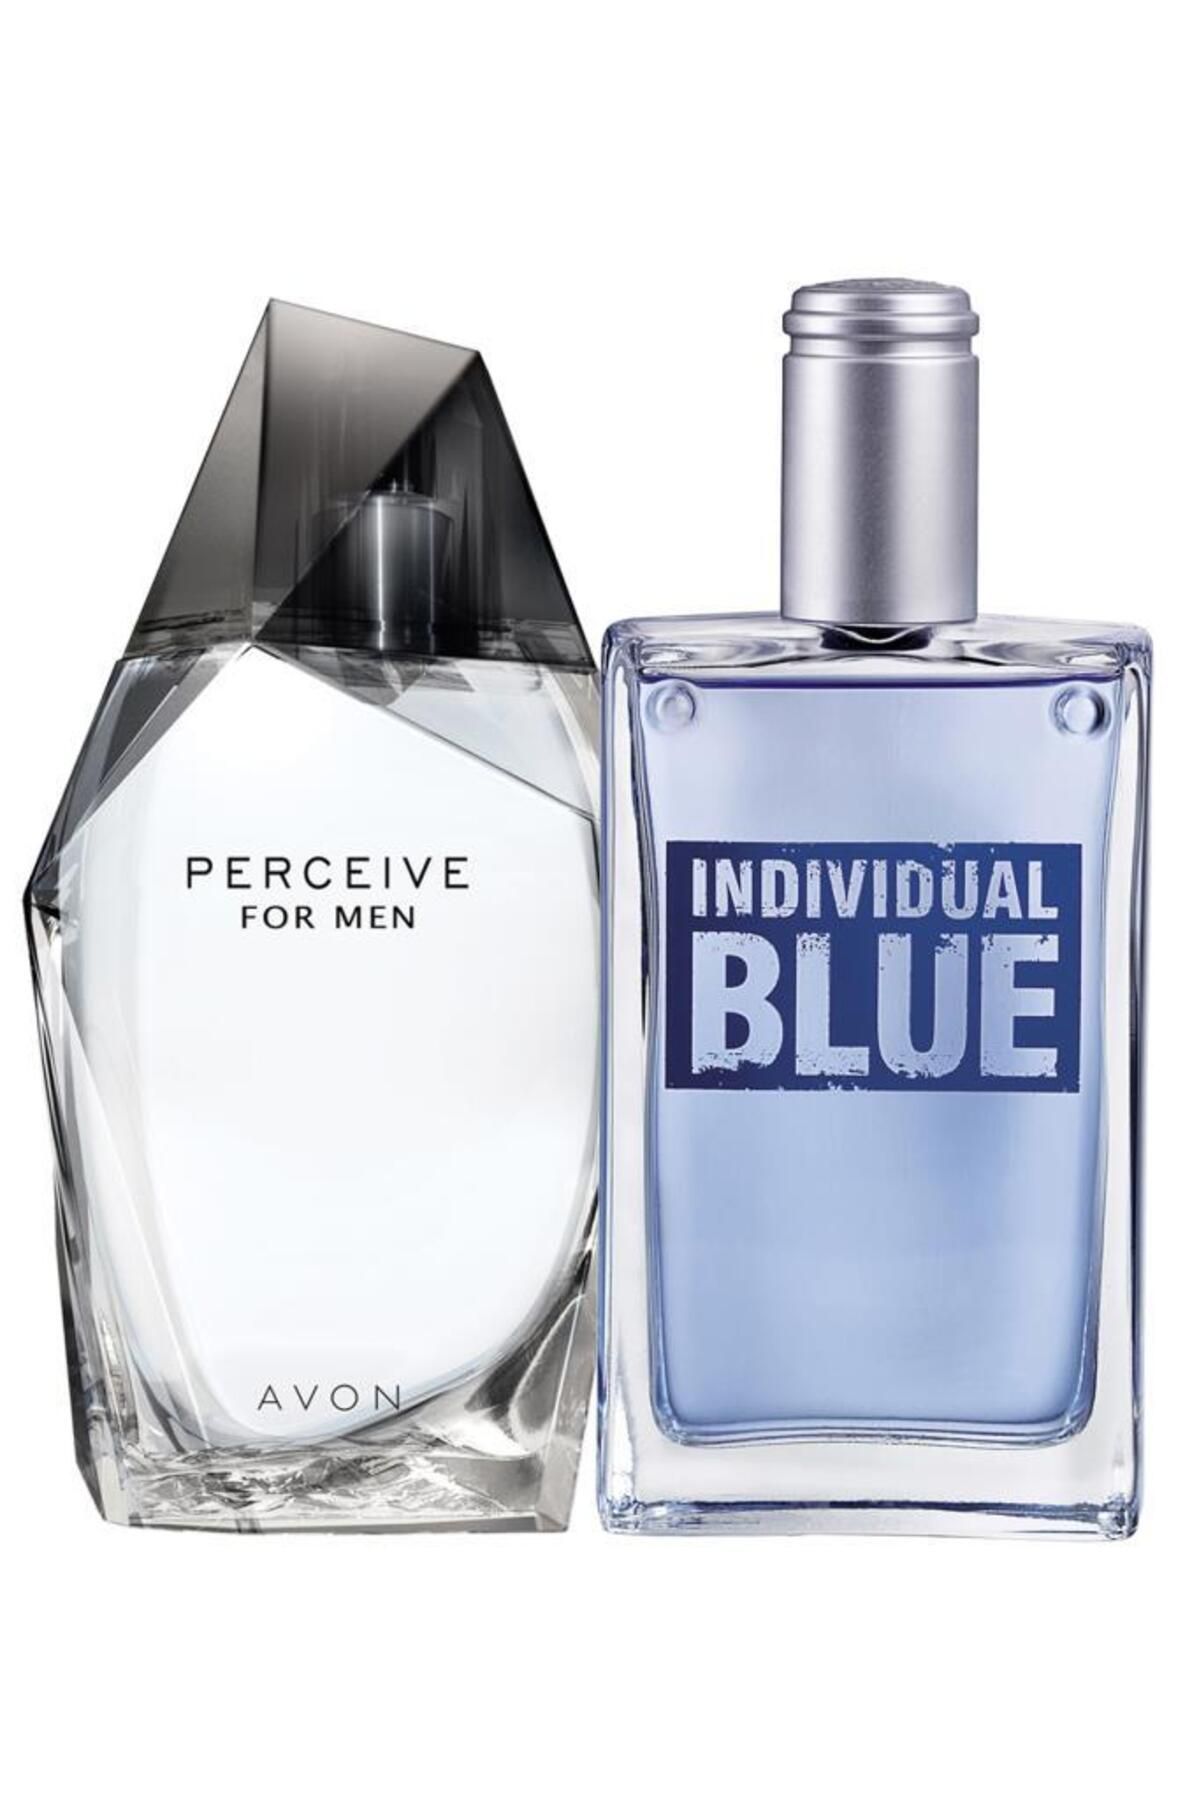 Avon Perceive Erkek Parfüm 100 Ml. ve Individual Blue Erkek Parfüm 75 Ml. İkili Paket